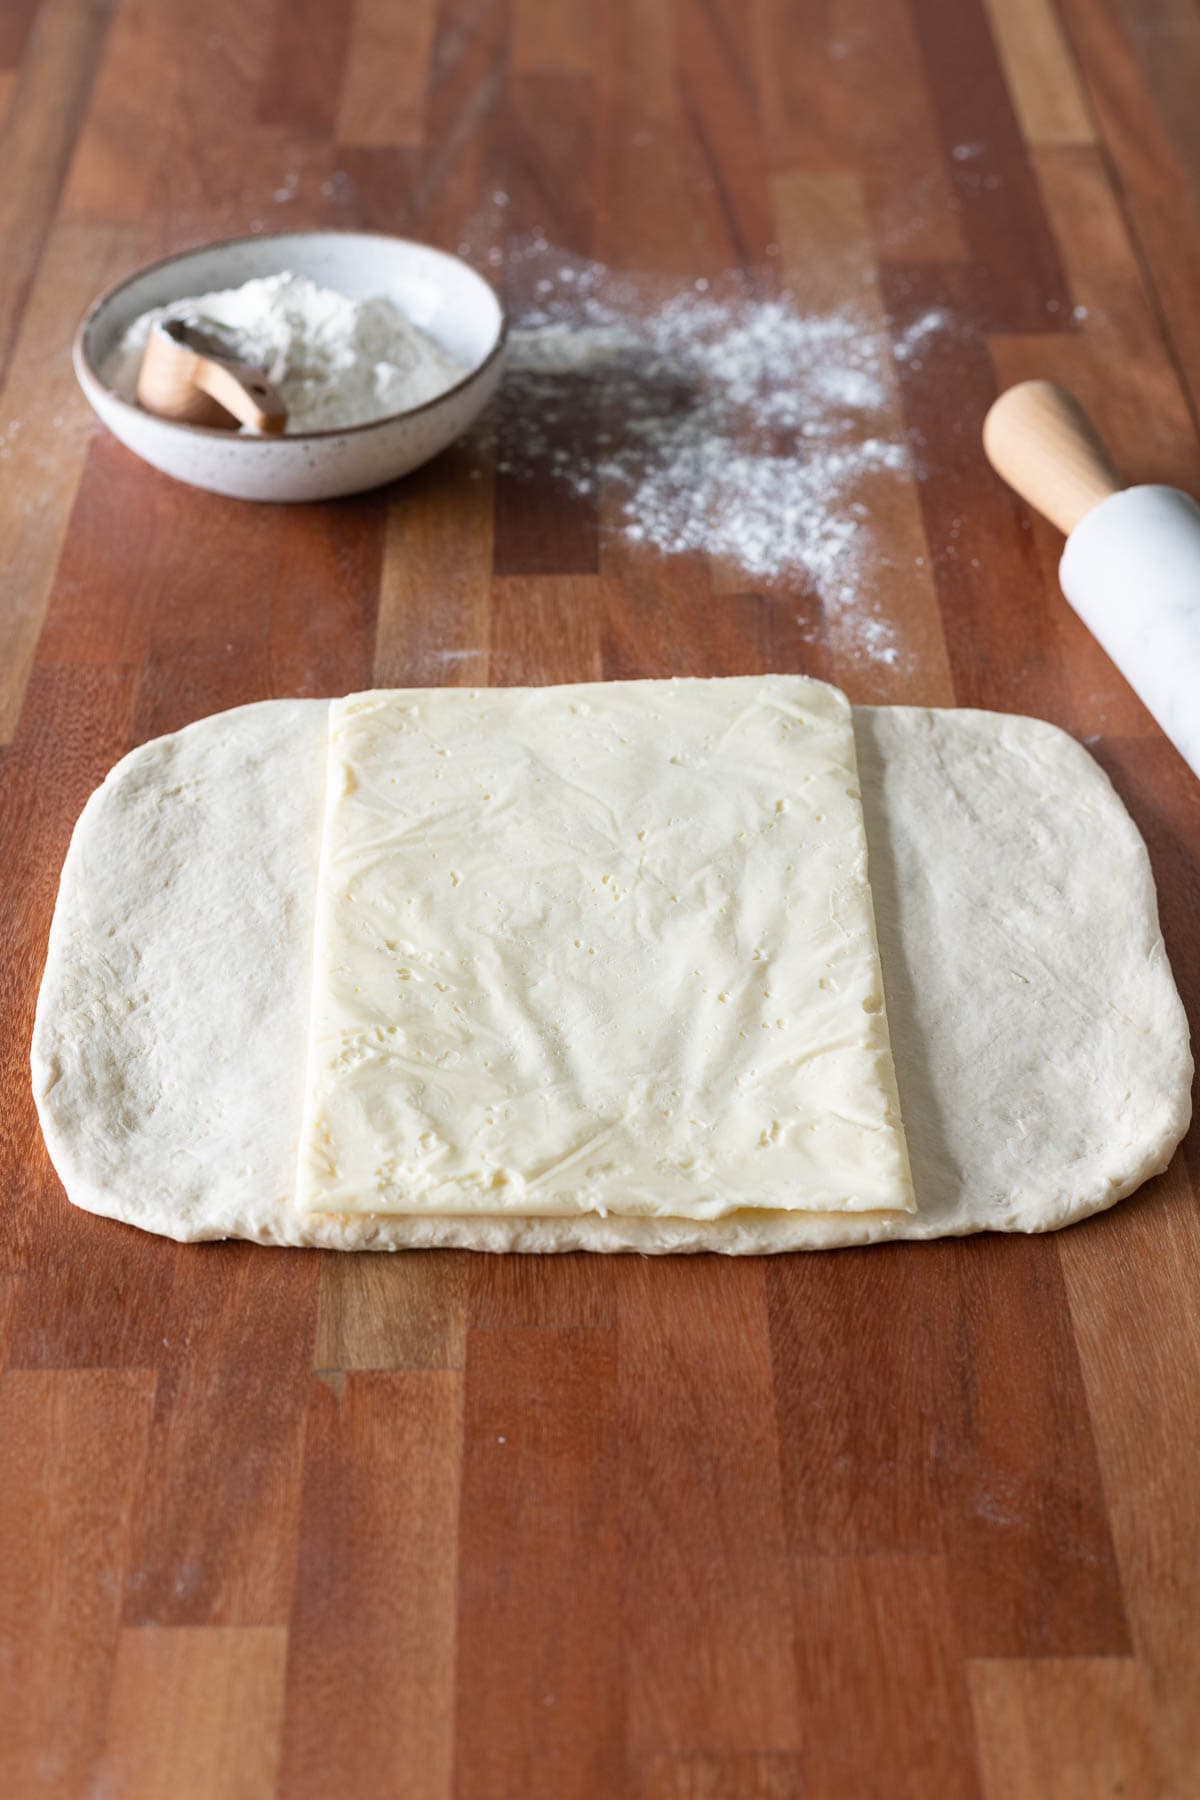 Butter rectangle inside croissant dough with a bowl of flour